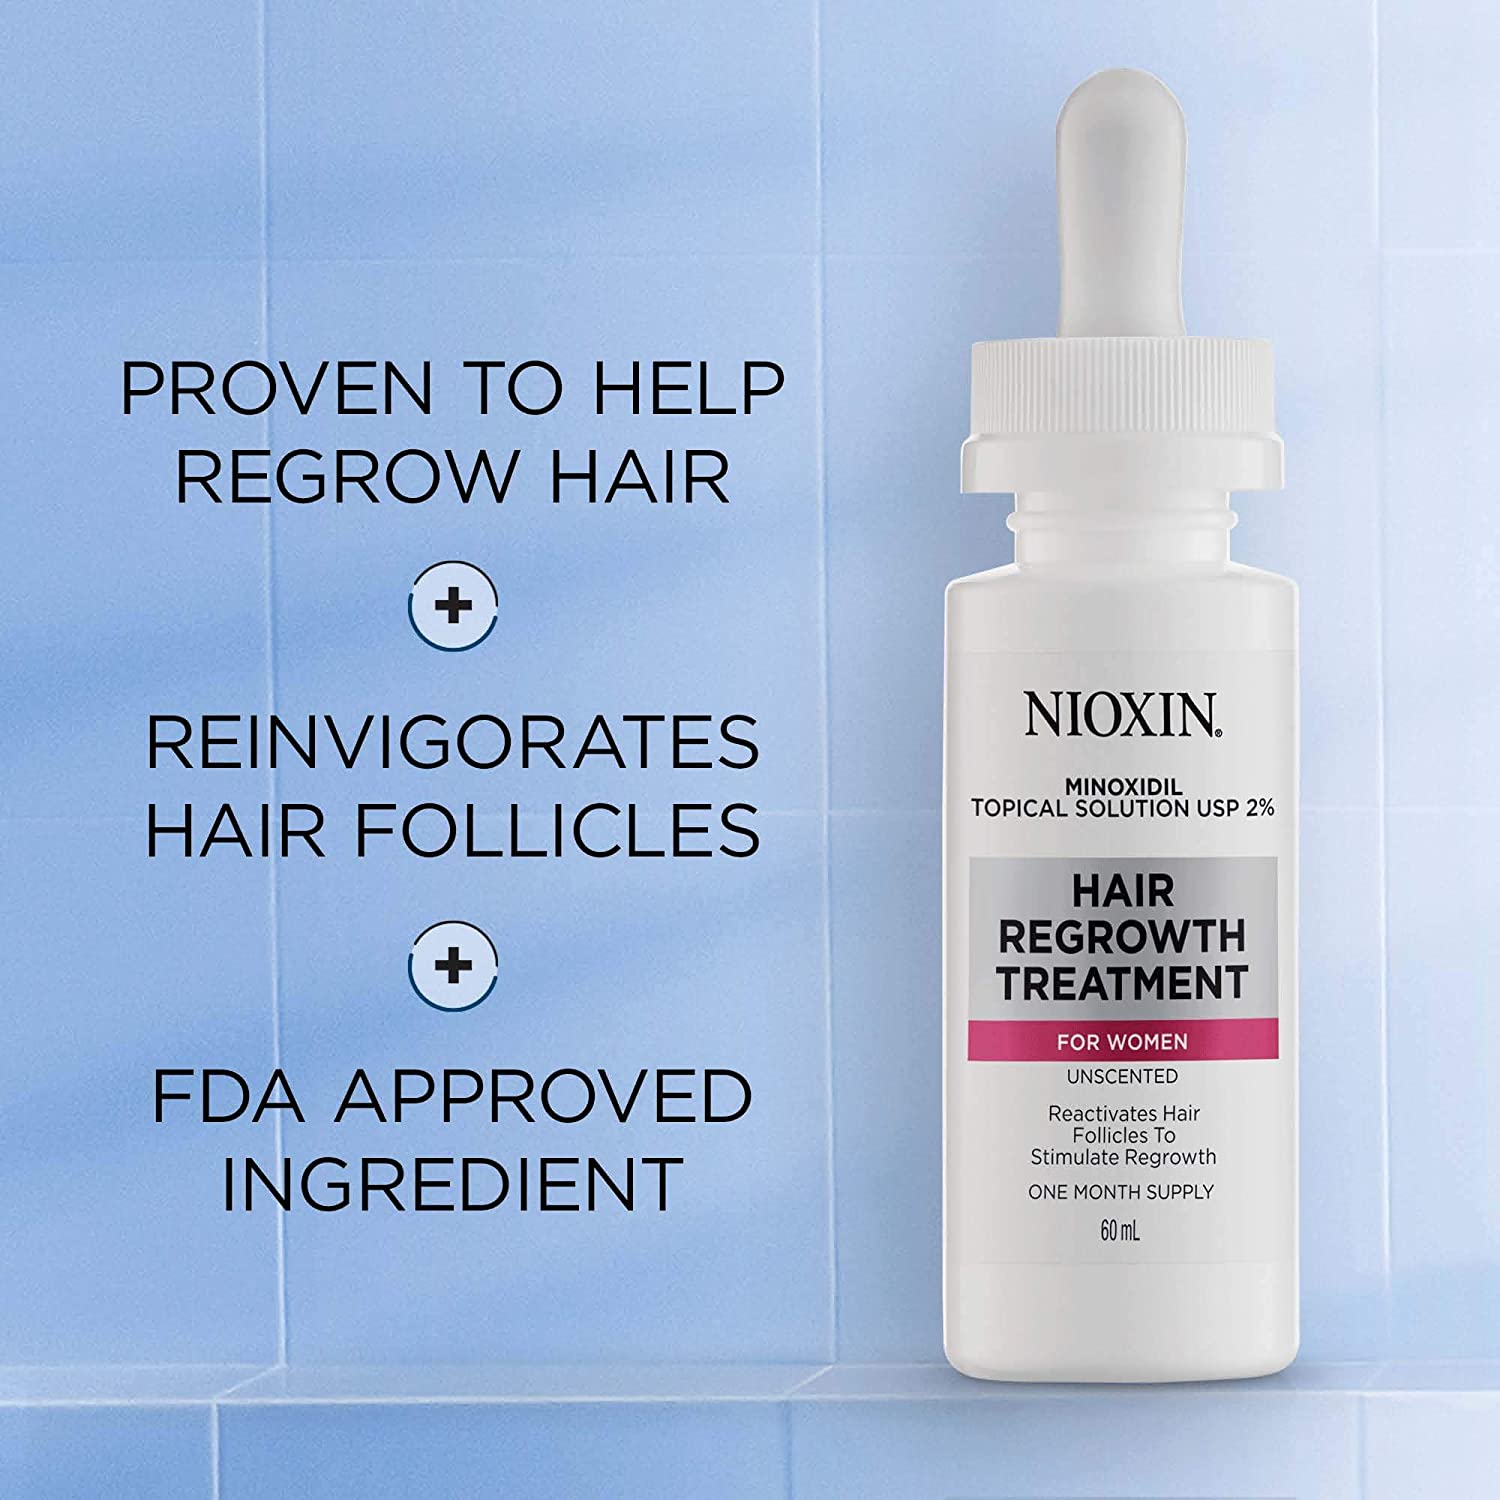 Nioxin Hair Regrowth Kit for Women Benefits